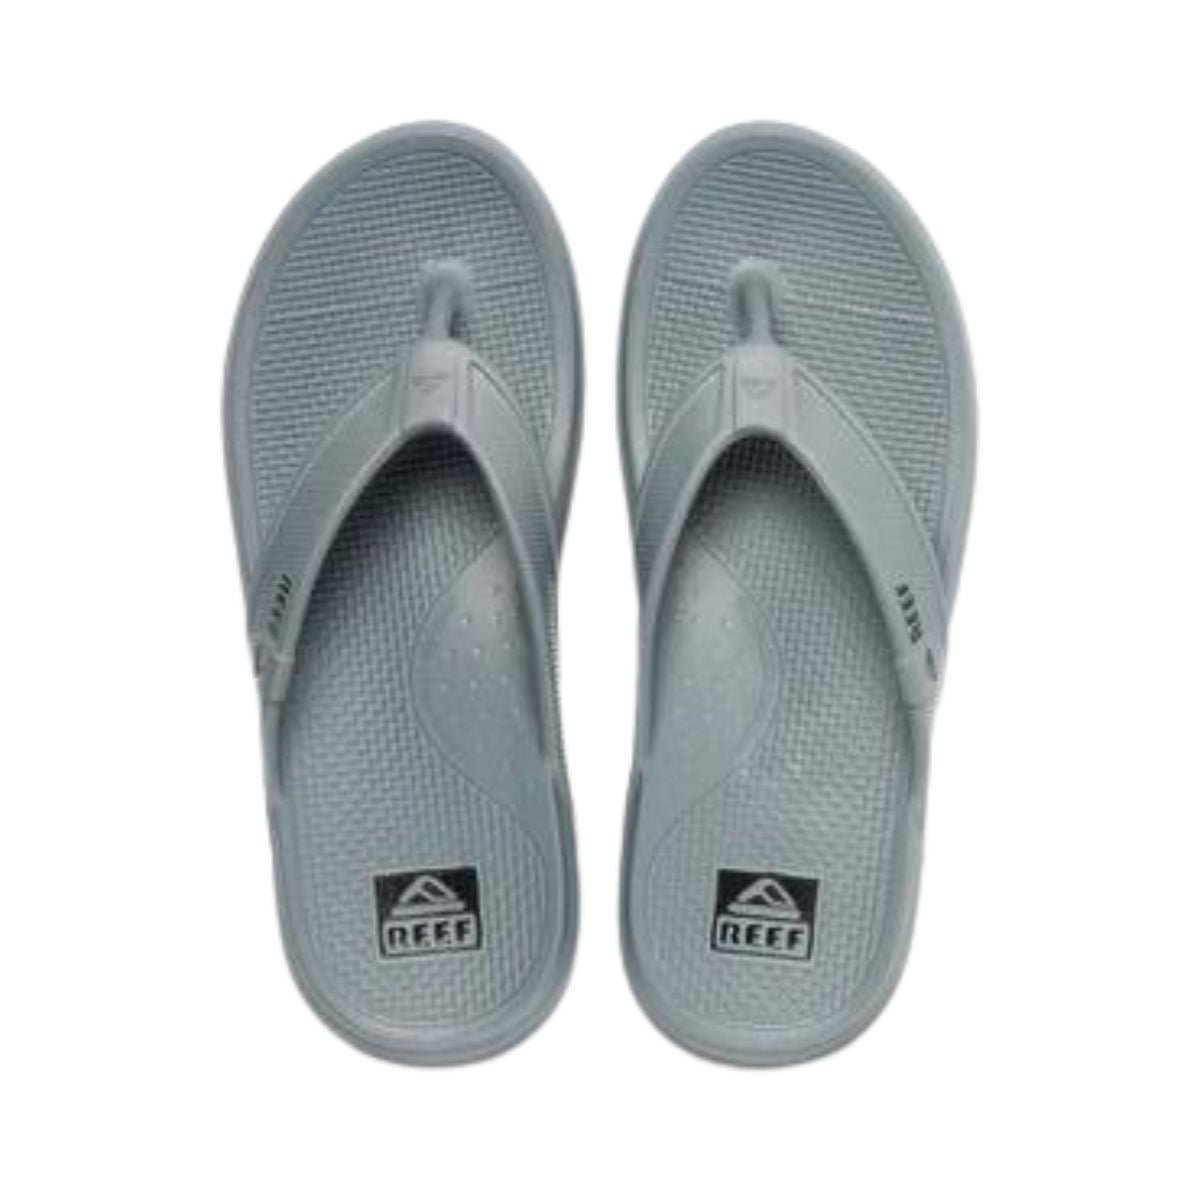 Reef Oasis Men's Sandal in Grey - BoardCo